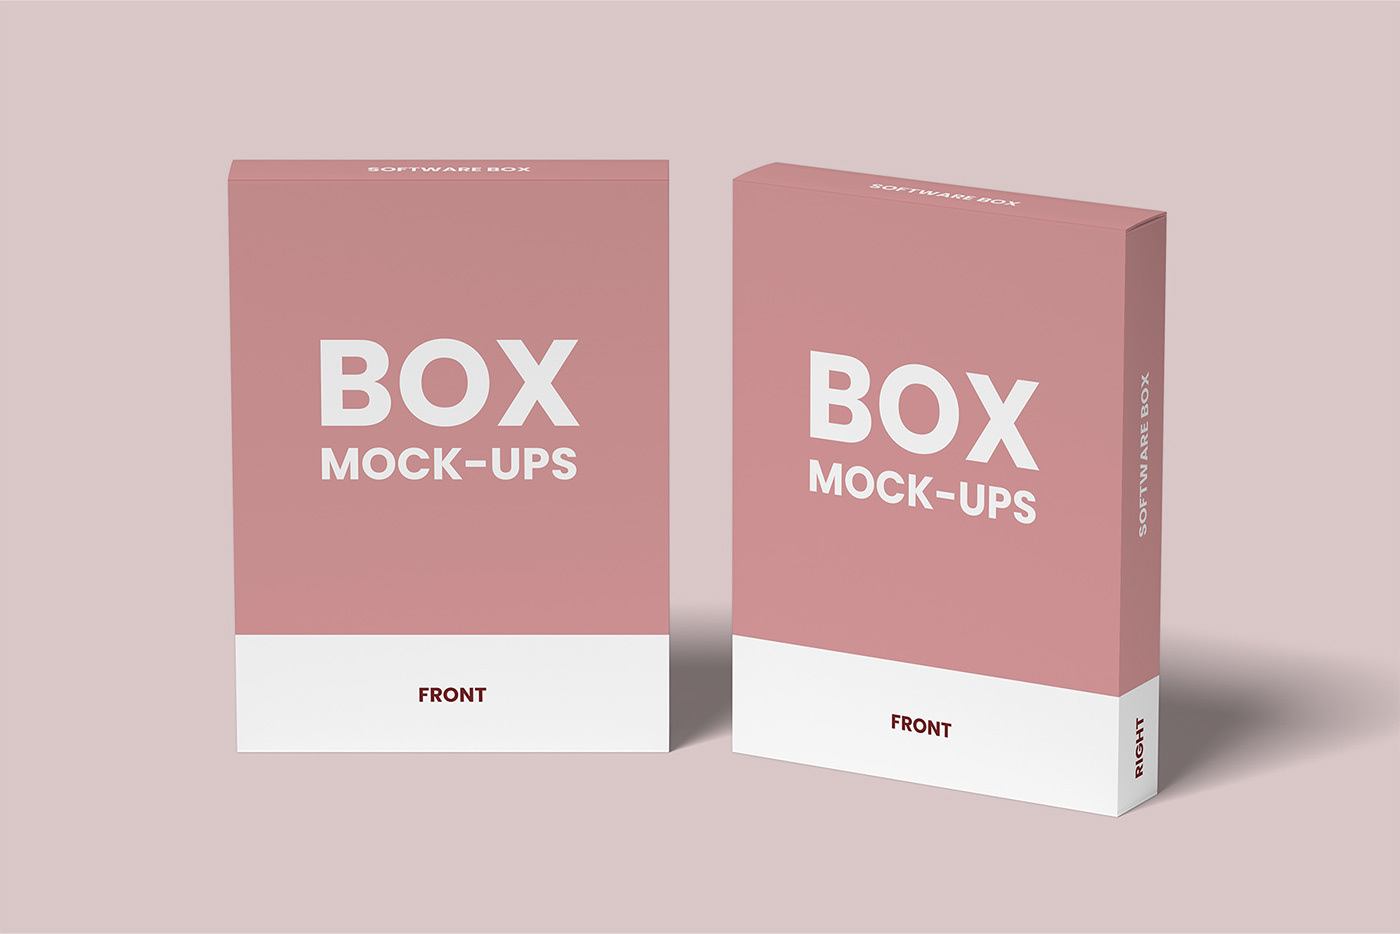 Mockup mockup design mockup psd mockup free box box design box packaging Packaging packaging design packaging mockup